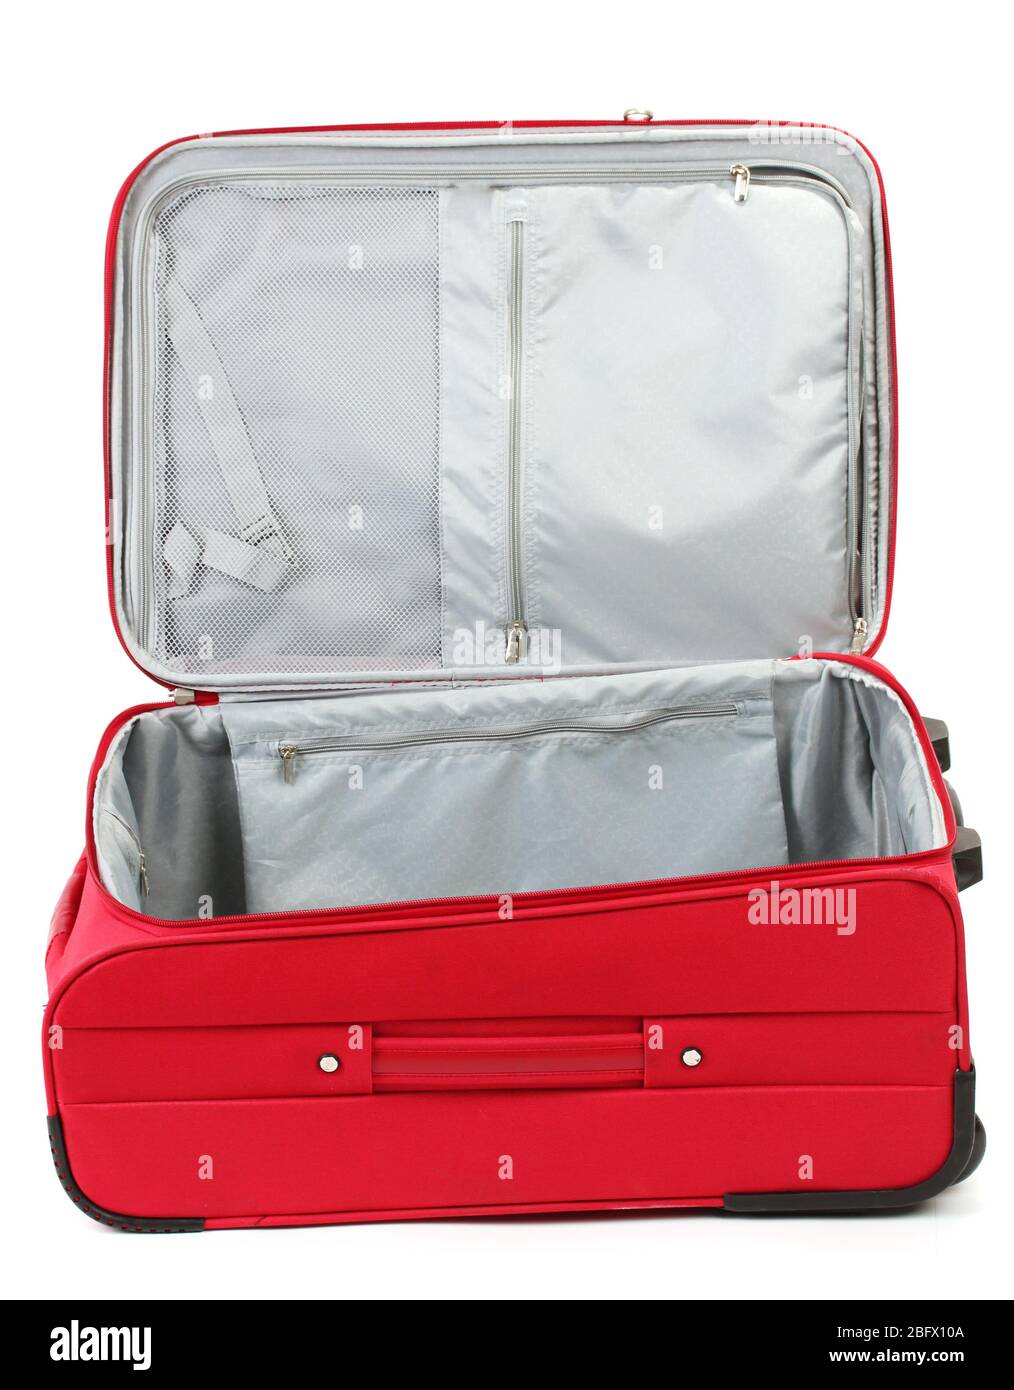 Valigia rossa vuota aperta isolata su bianco Foto stock - Alamy